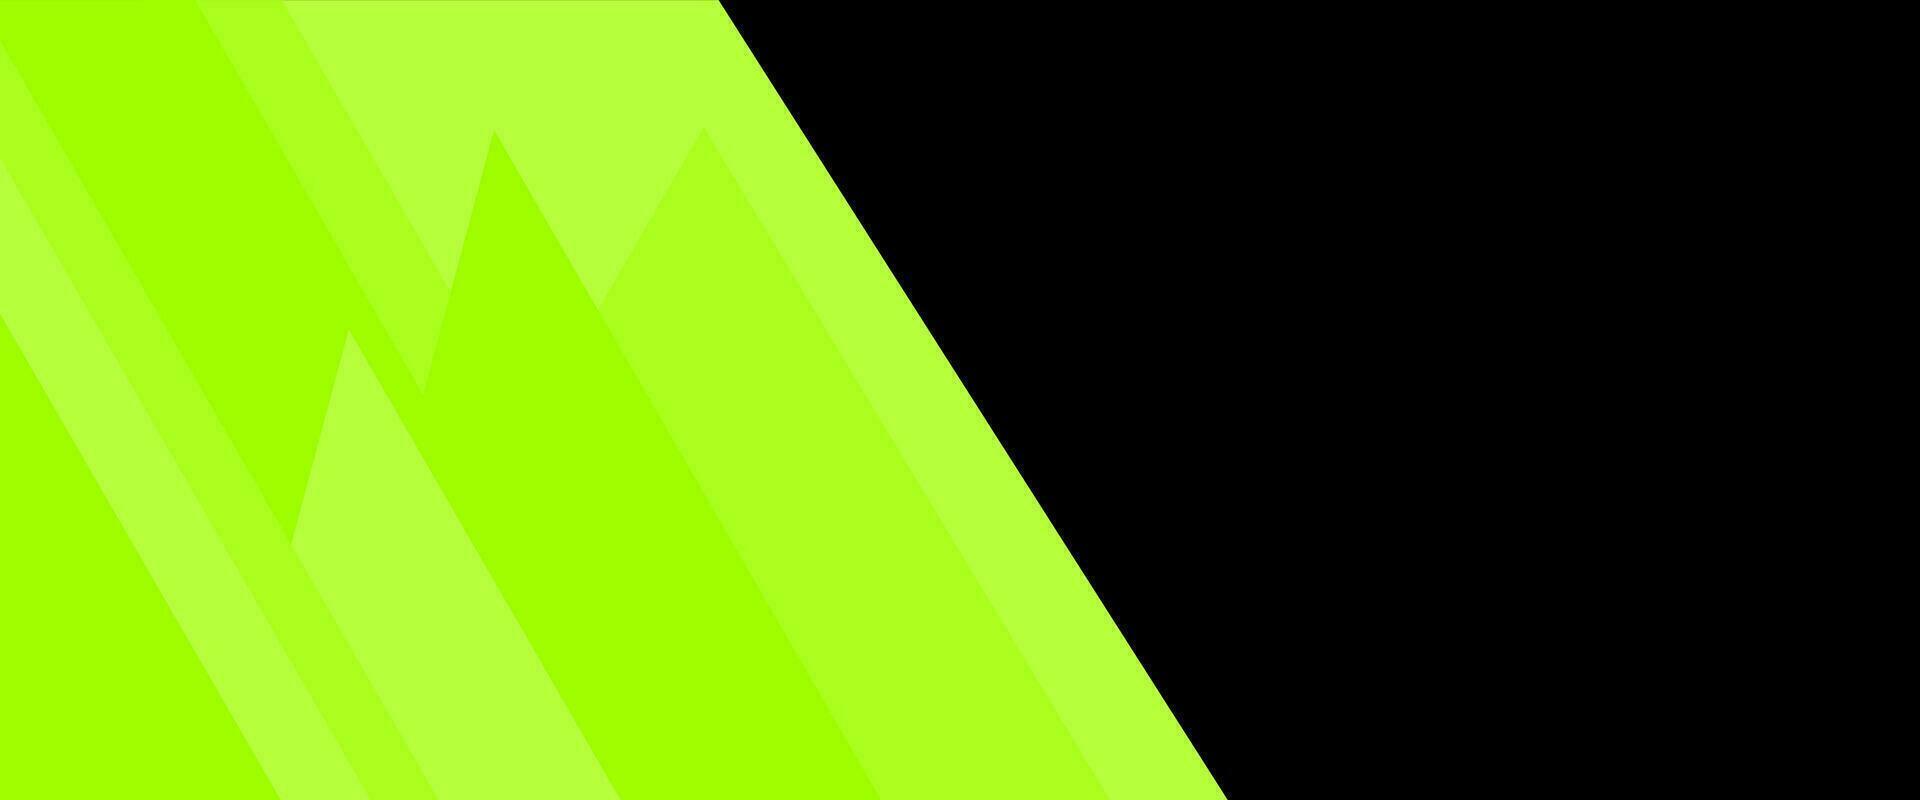 moderno verde fundo bandeira projeto, jogos, Esportes, cyber tema vetor